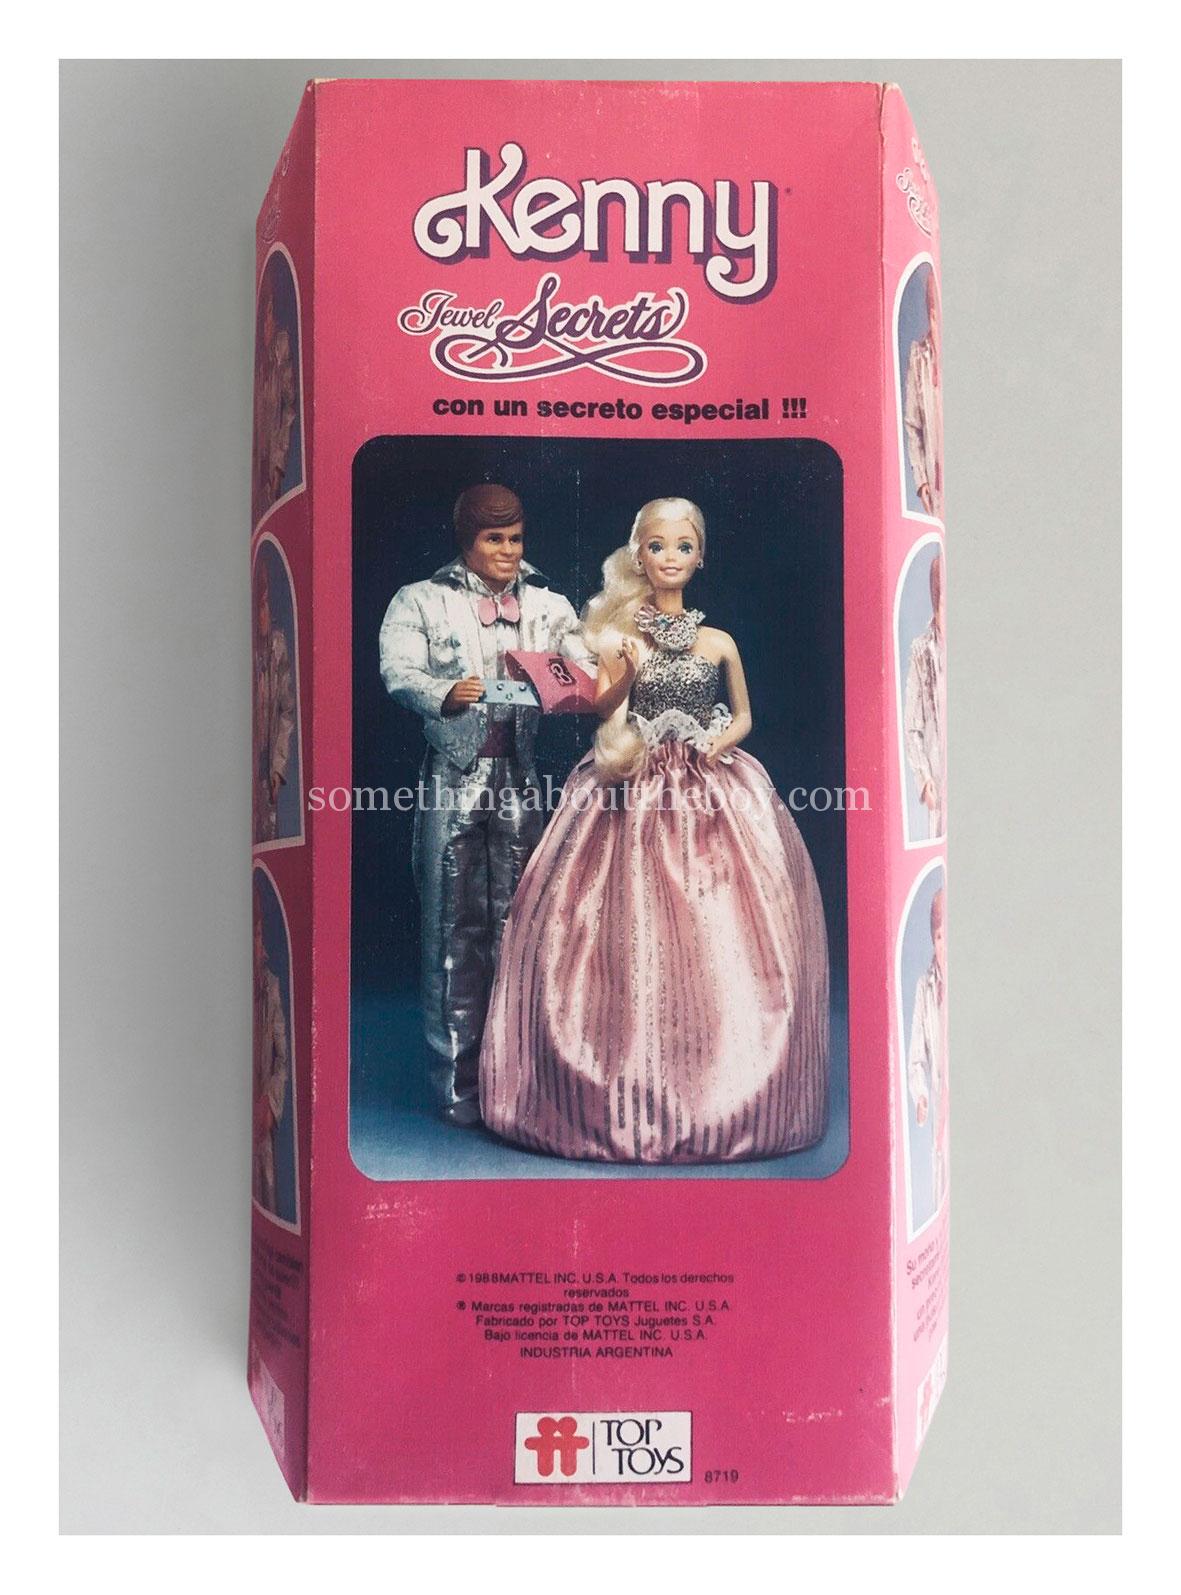 1988 #8719 Kenny Jewel Secrets (Argentinian version) original packaging